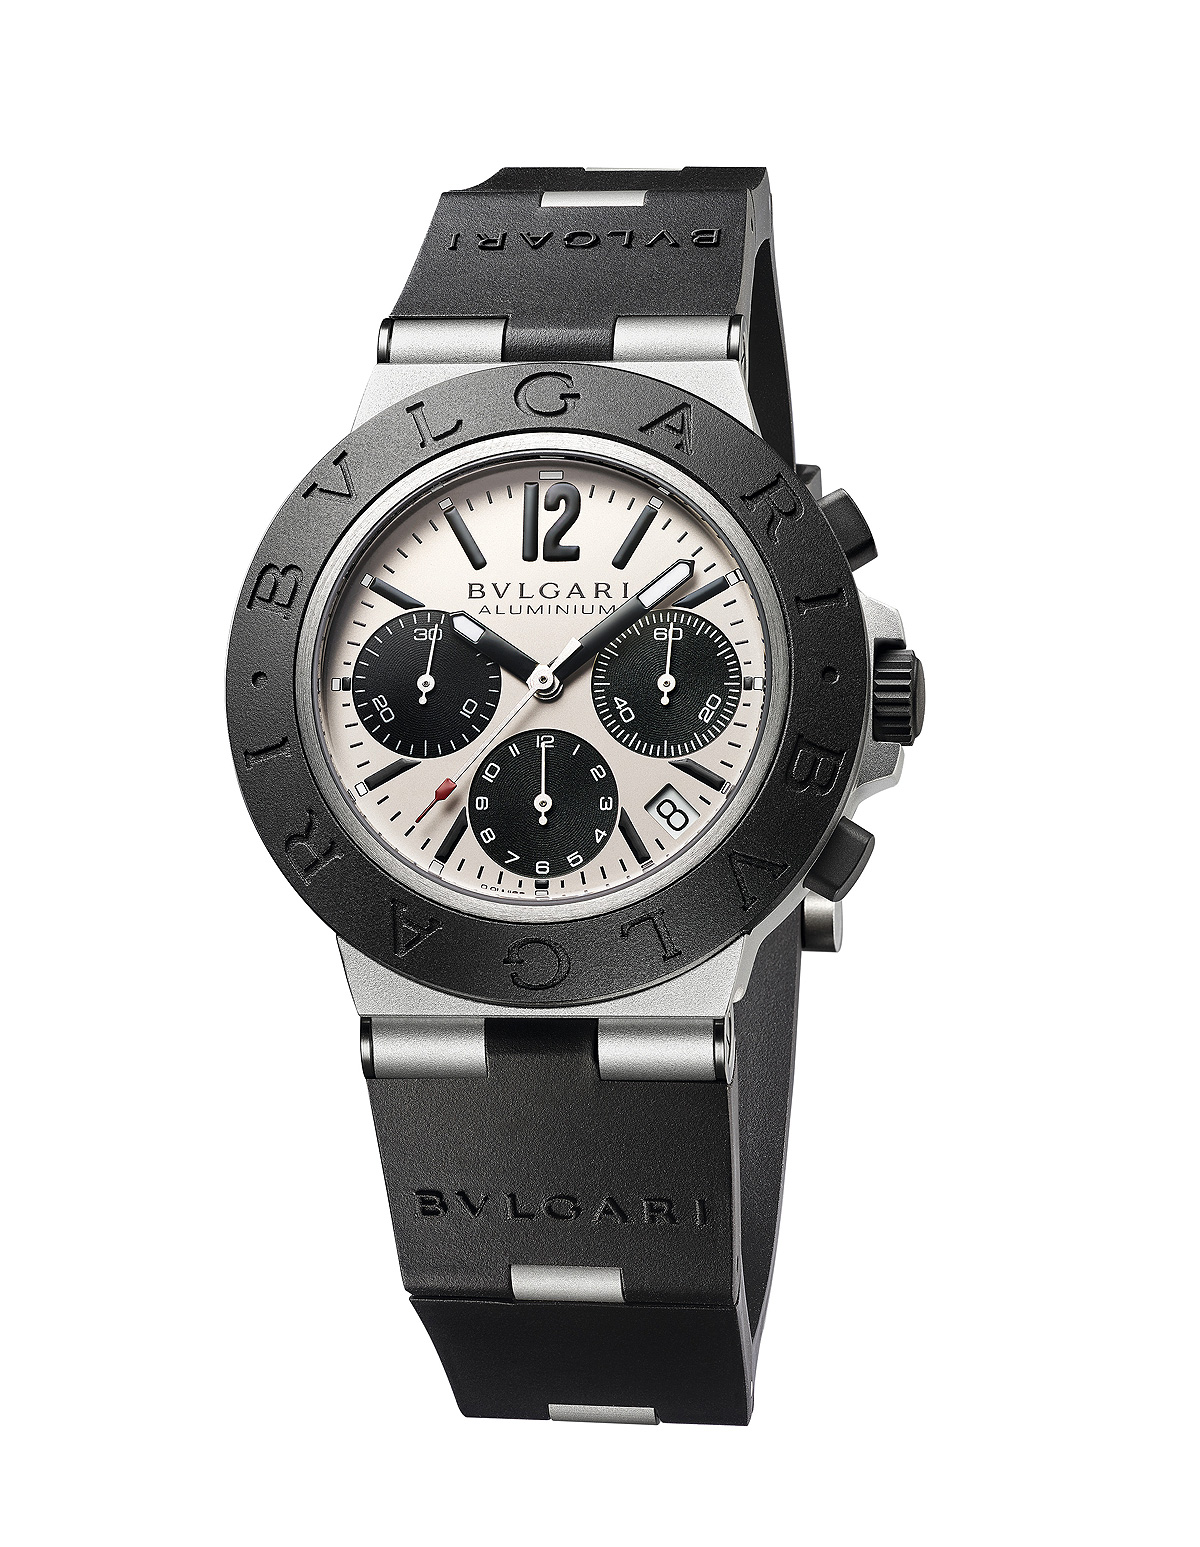 Bulgari Aluminium Watch Updates a 1990s Jet-Set Classic | WatchTime ...